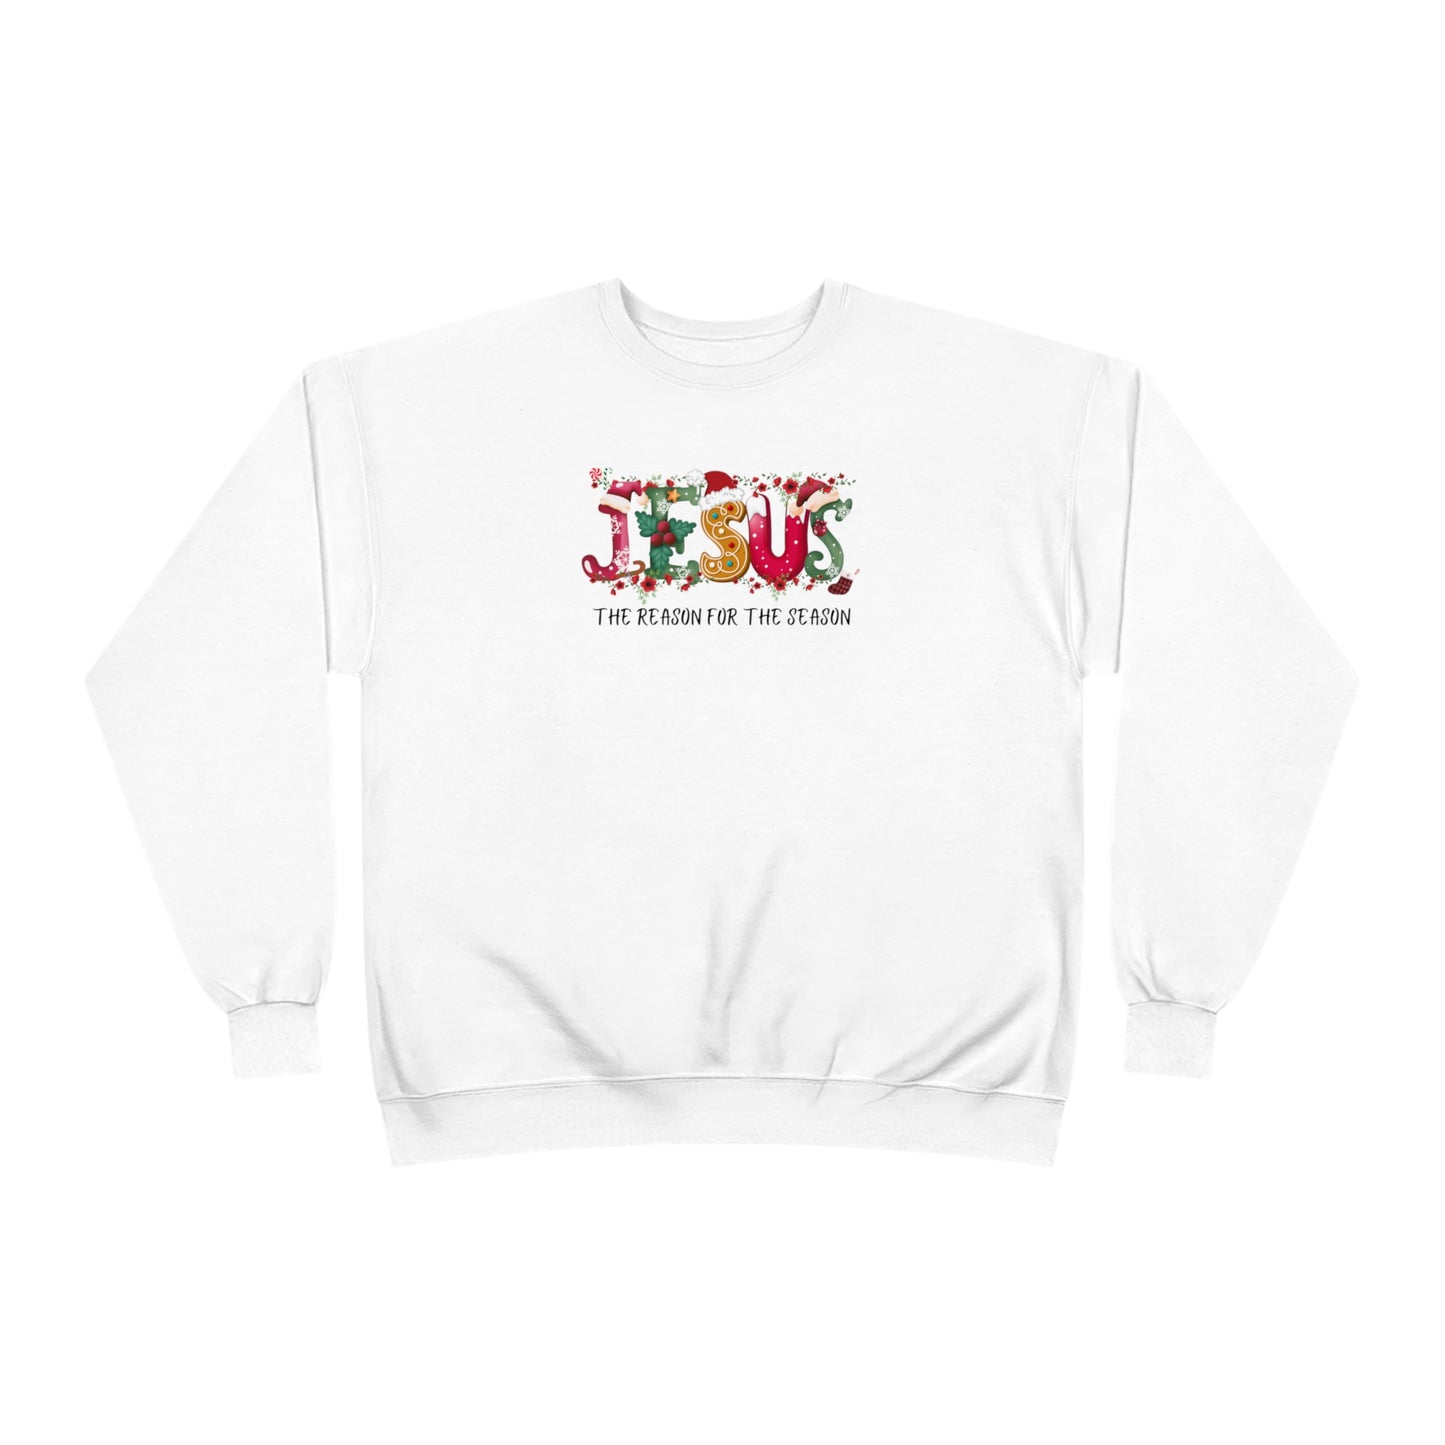 Jesus The Reason For The Season | Unisex EcoSmart® Crewneck Sweatshirt